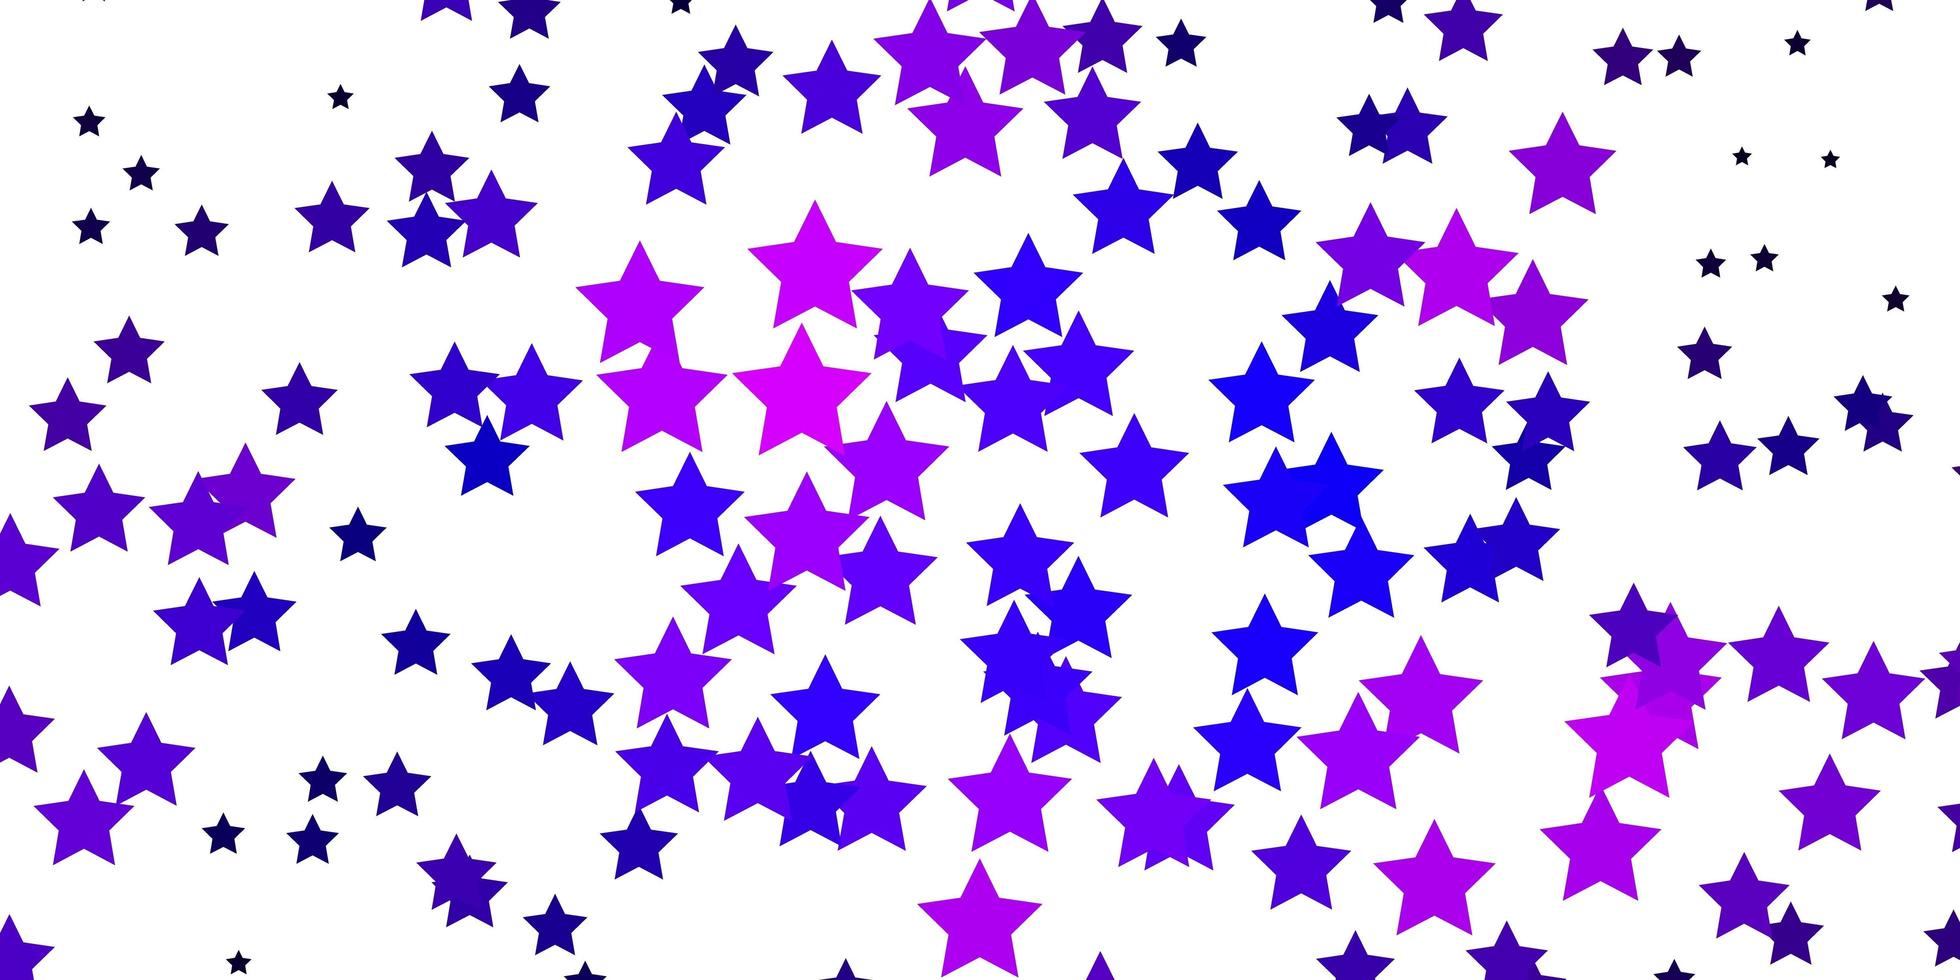 Dark Purple vector layout with bright stars.